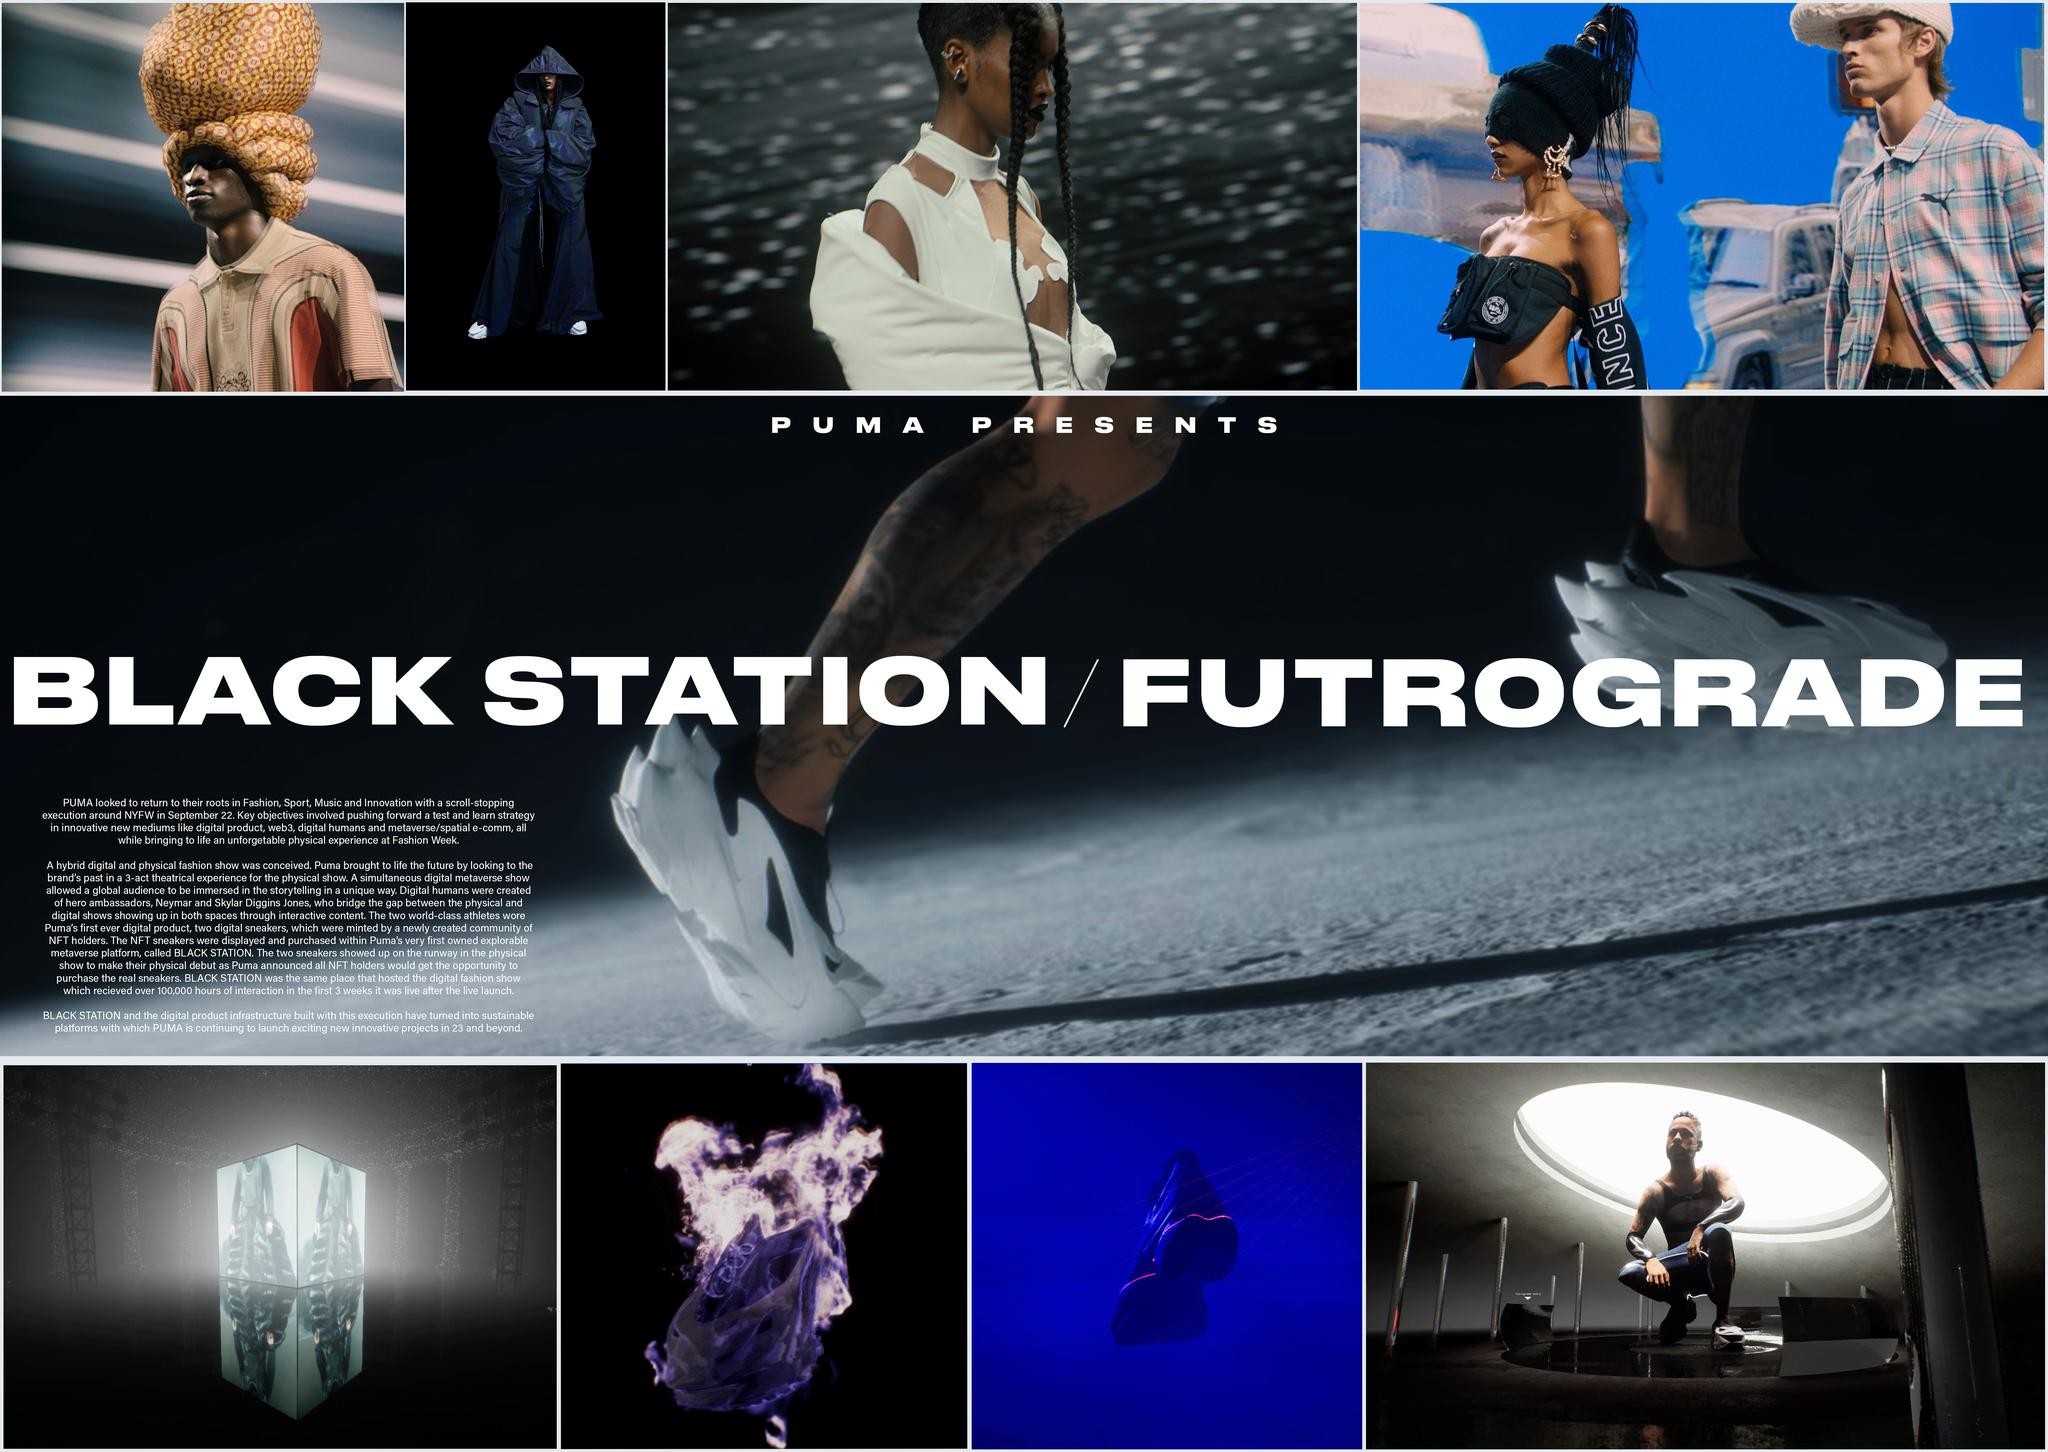 Puma Presents: FUTROGRADE at BLACK STATION